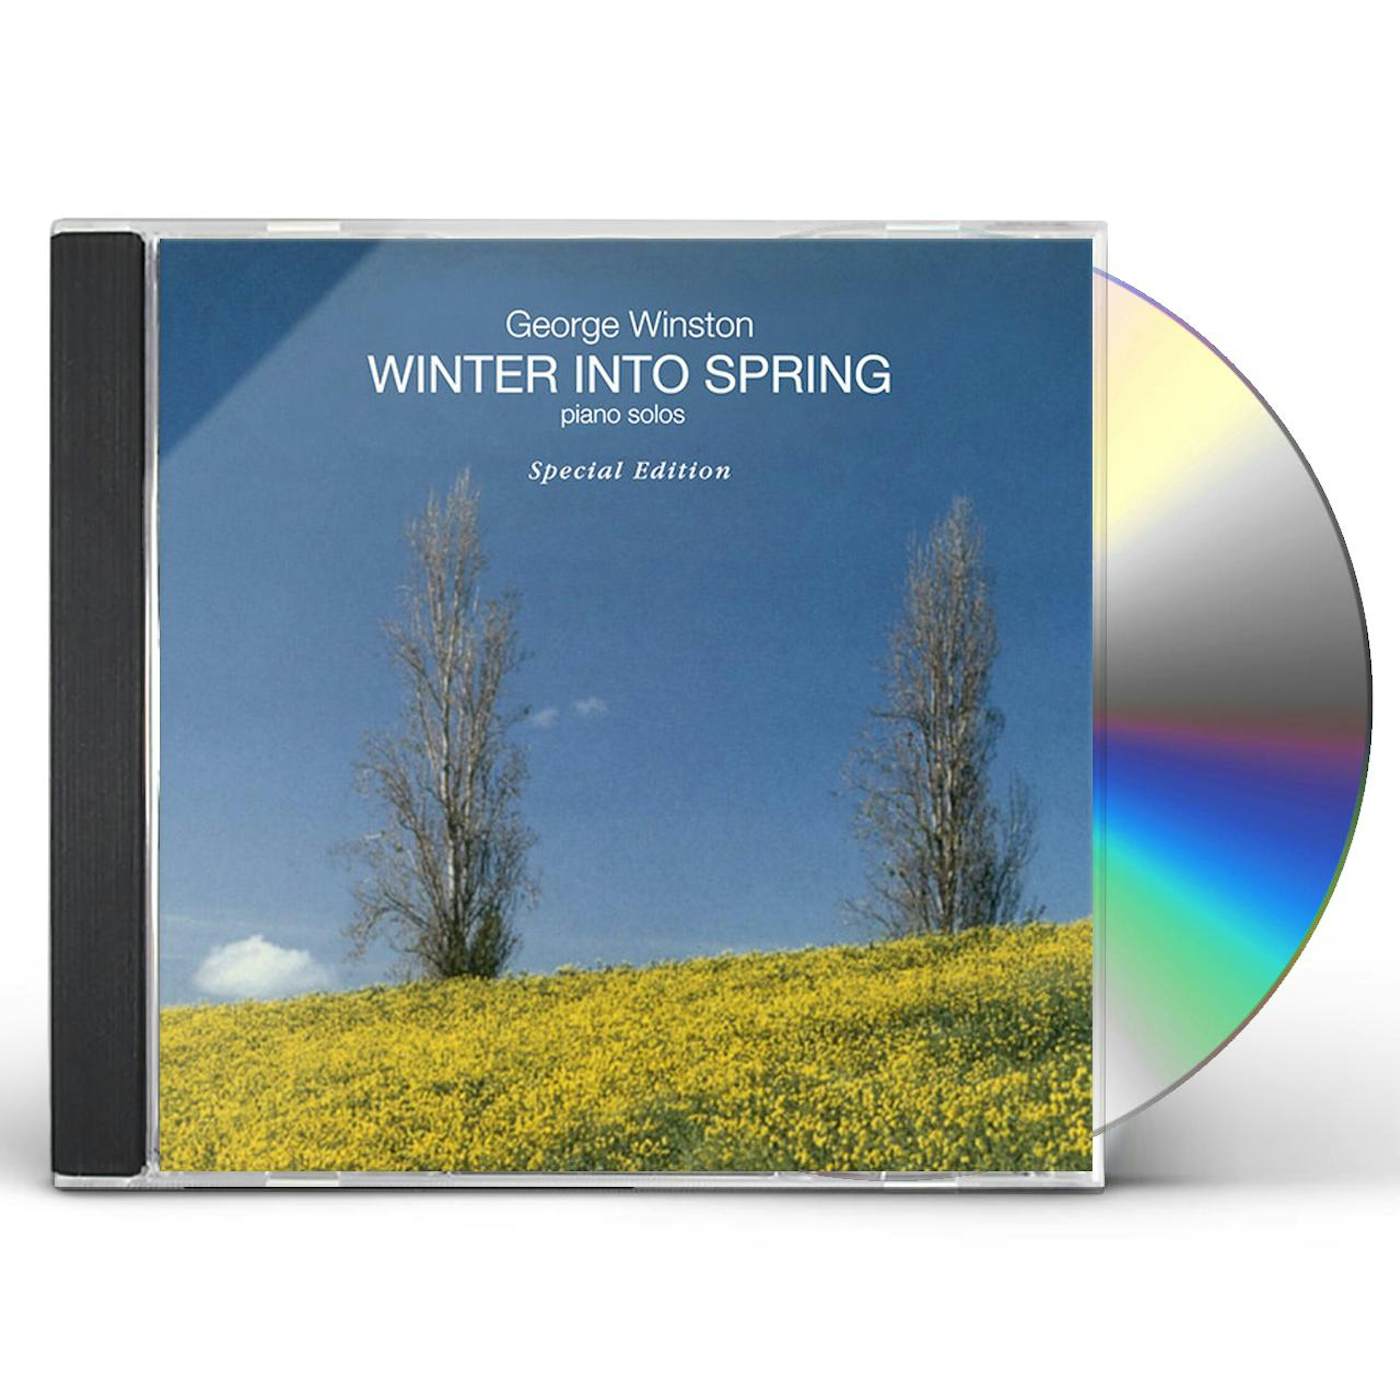 George Winston WINTER INTO SPRING CD